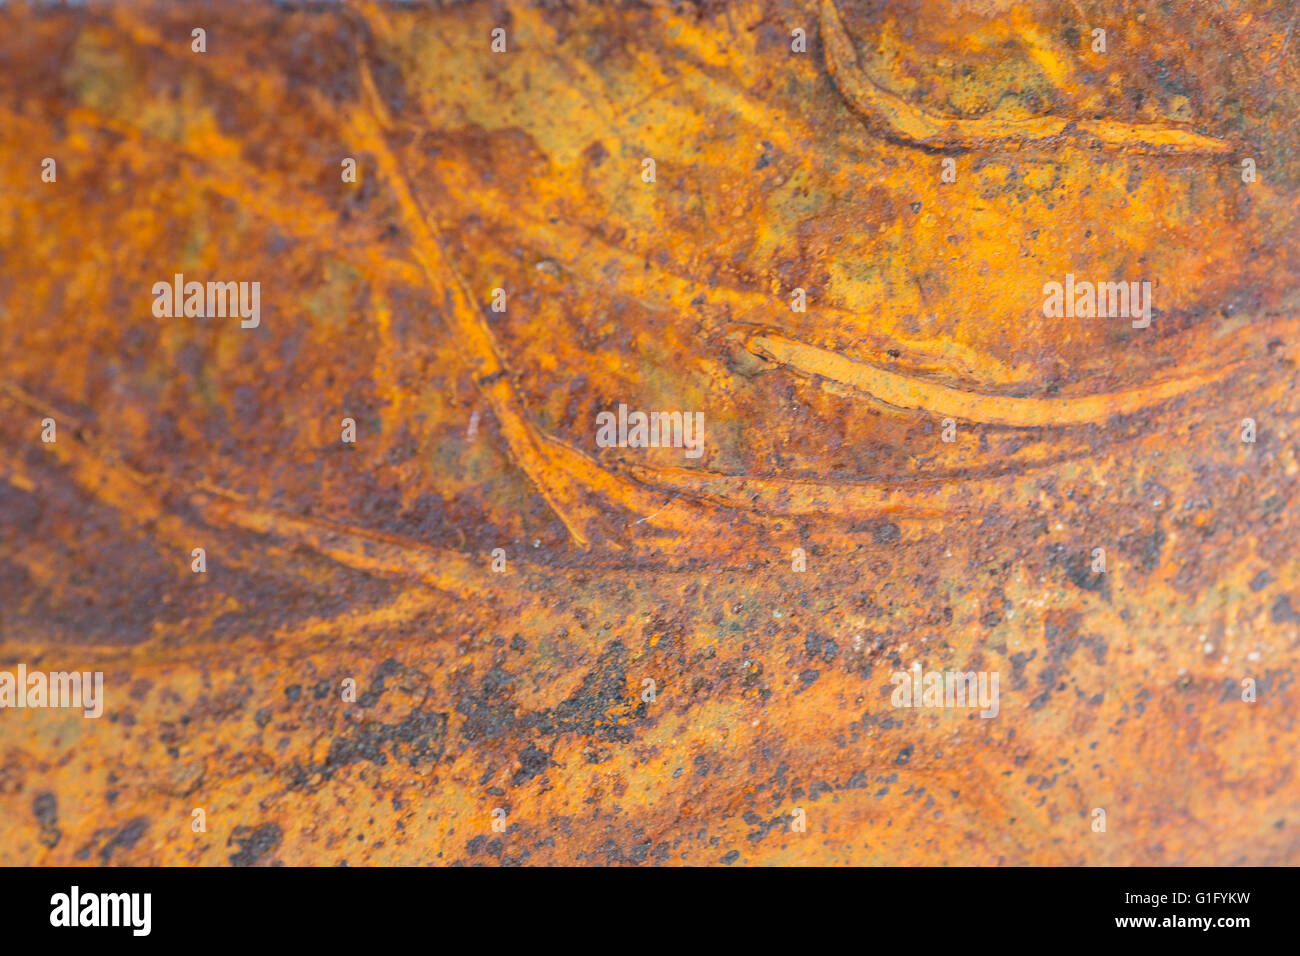 detail image of rust on a  metal wheelbarrow Stock Photo